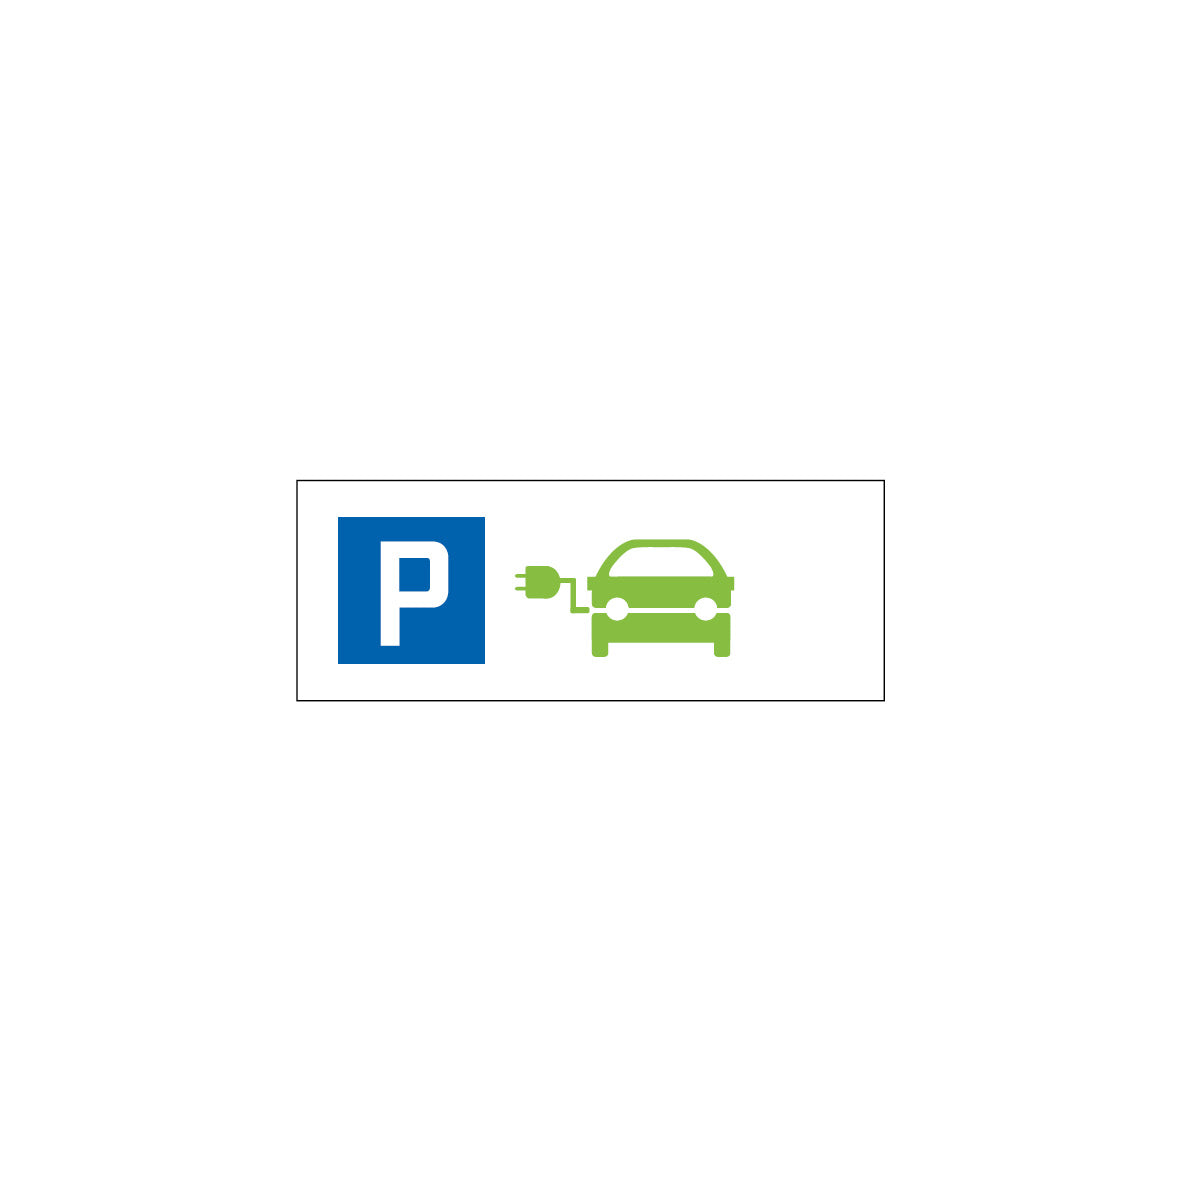 Parkplatzschild 7.P, 7.P-012, R1, 4.17, Elektroauto 1